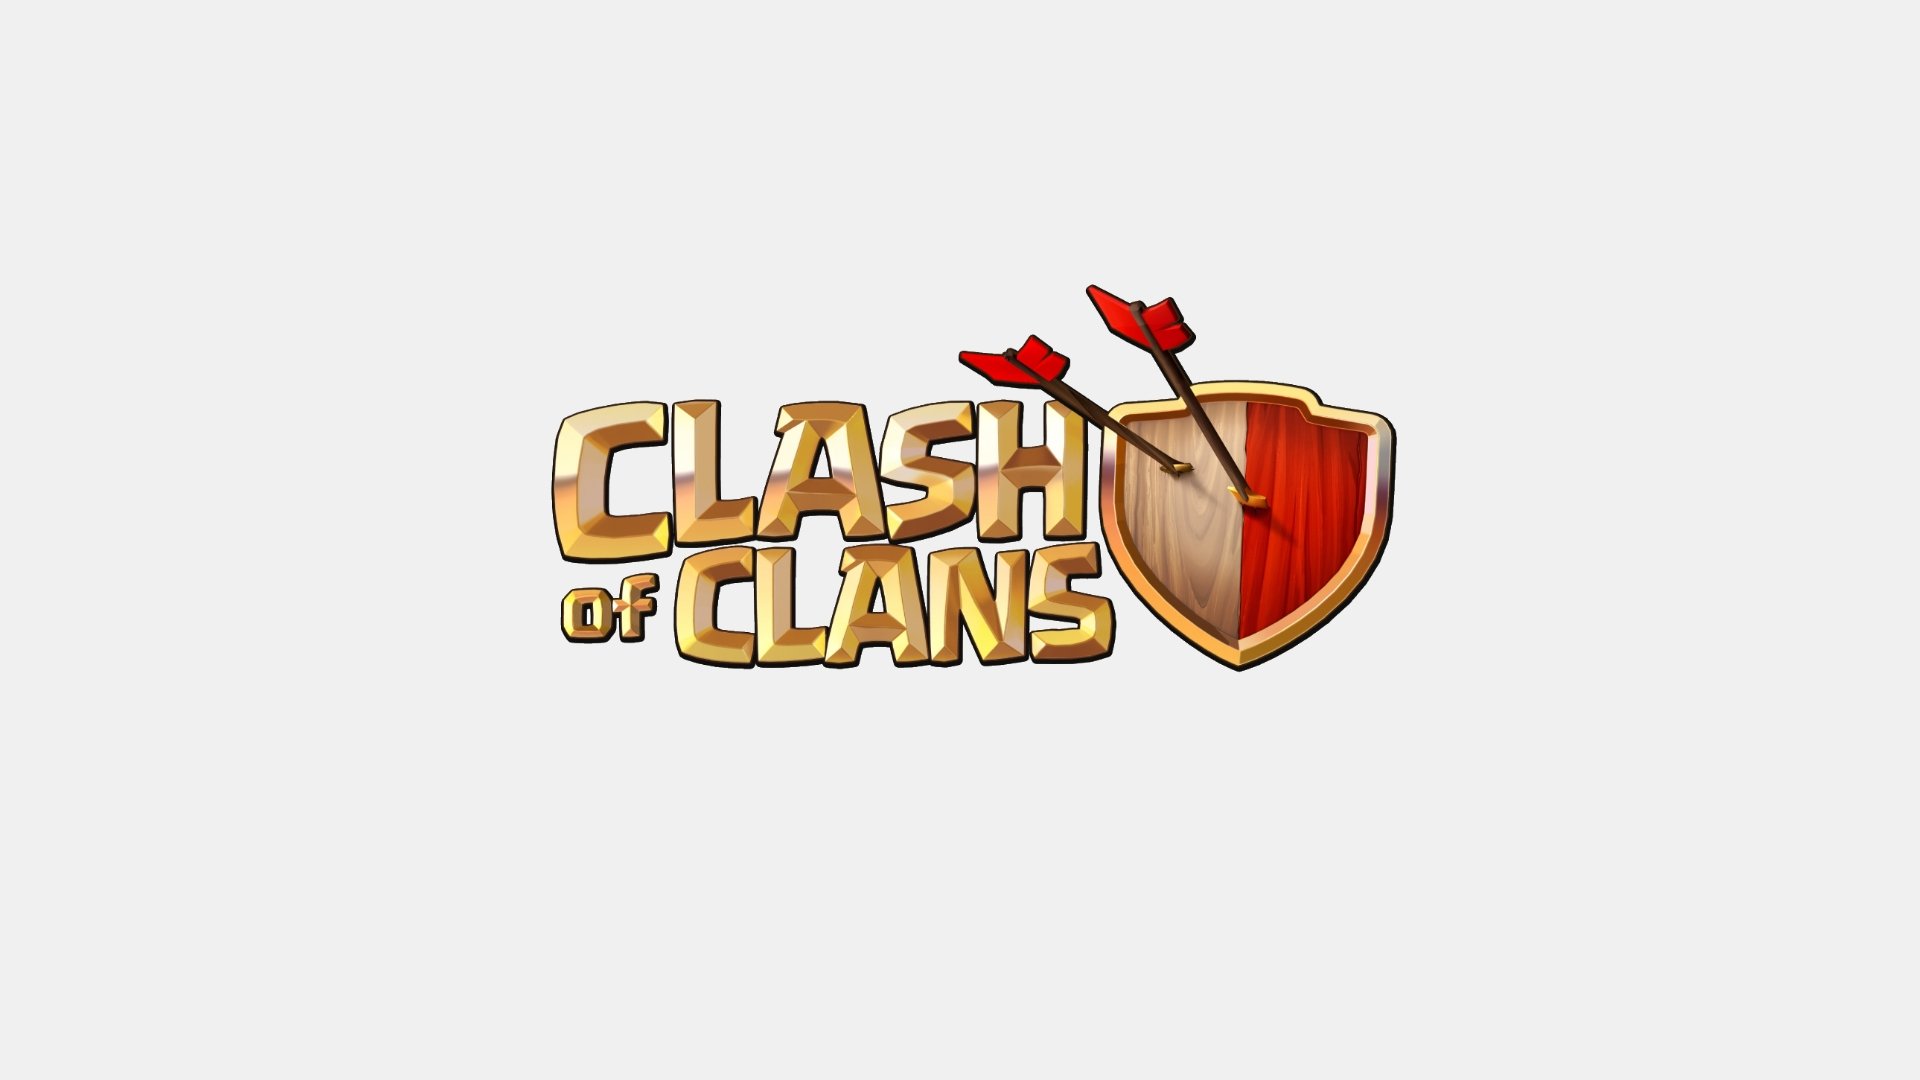 Заходи в clash of clans. Клеш оф кланс. Clash of Clans эмблема. Clash of Clans надпись. Иконка клэш оф кланс.